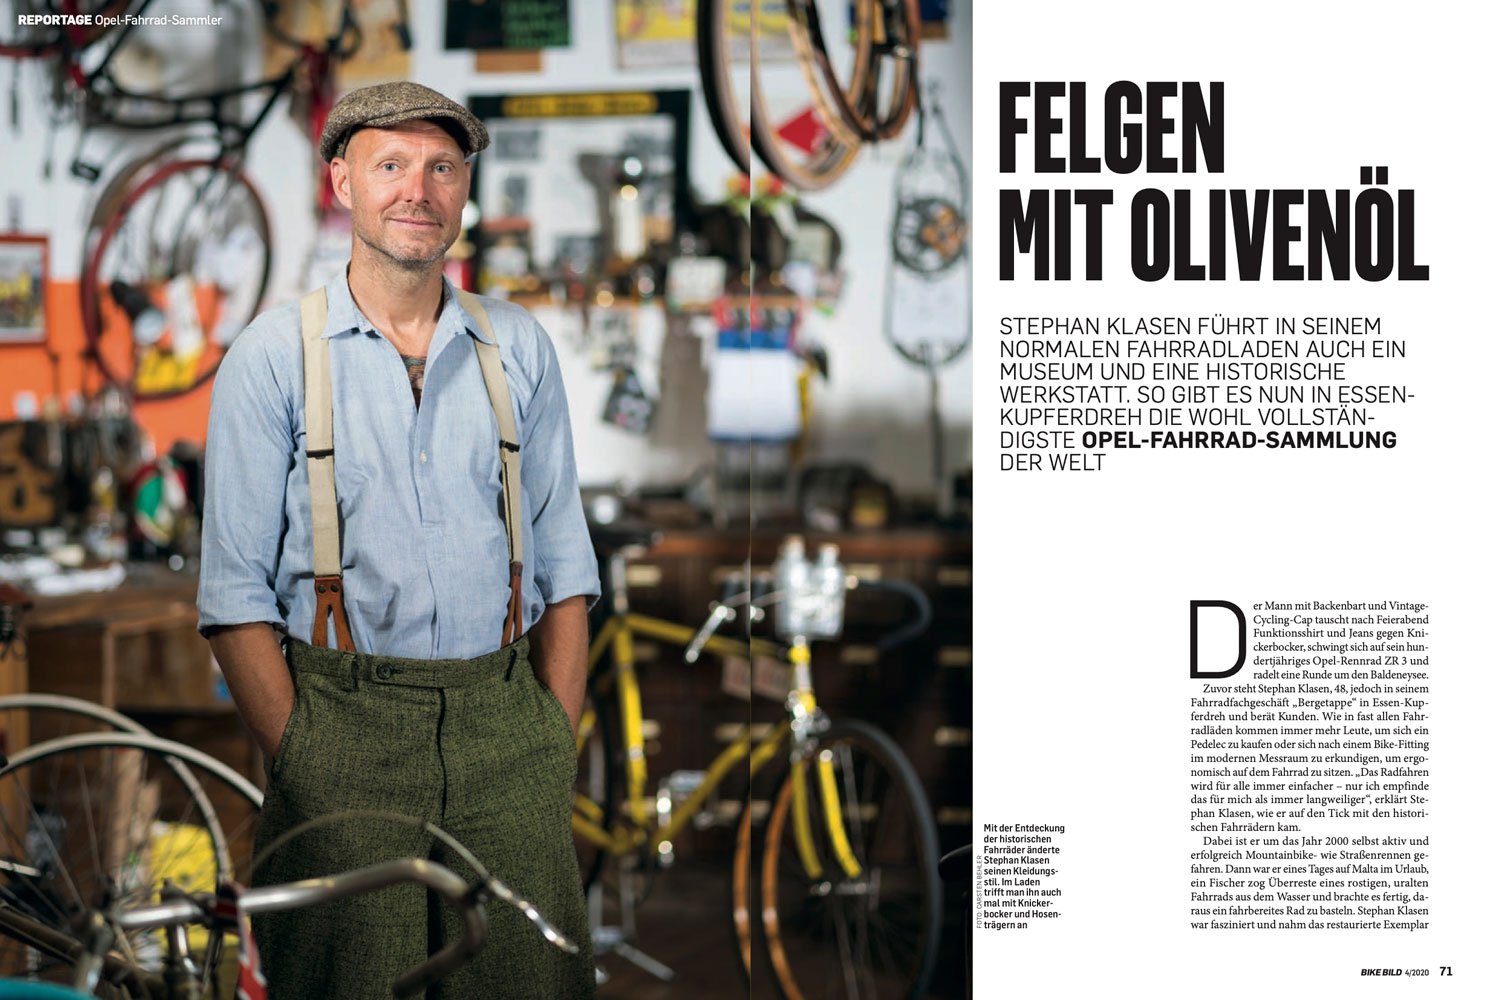 Photo Tear One by Carsten Behler for BIKE BILD showing Stephan Klasen in his bicycle workshop